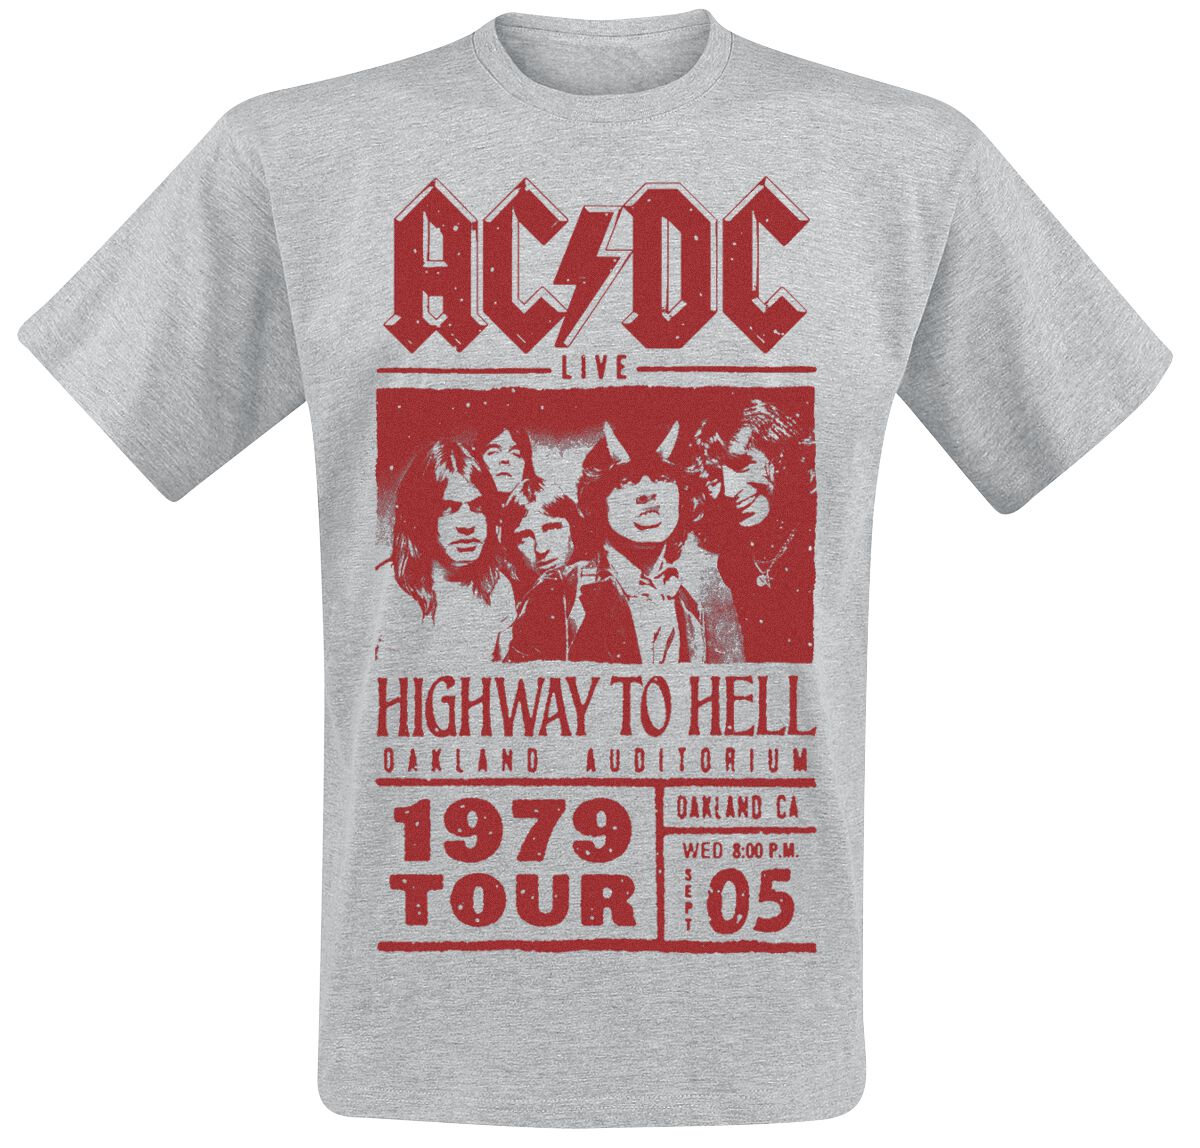 T-Shirt Manches courtes de AC/DC - Highway To Hell - Red Photo - 1979 Tour - M - pour Homme - gris c